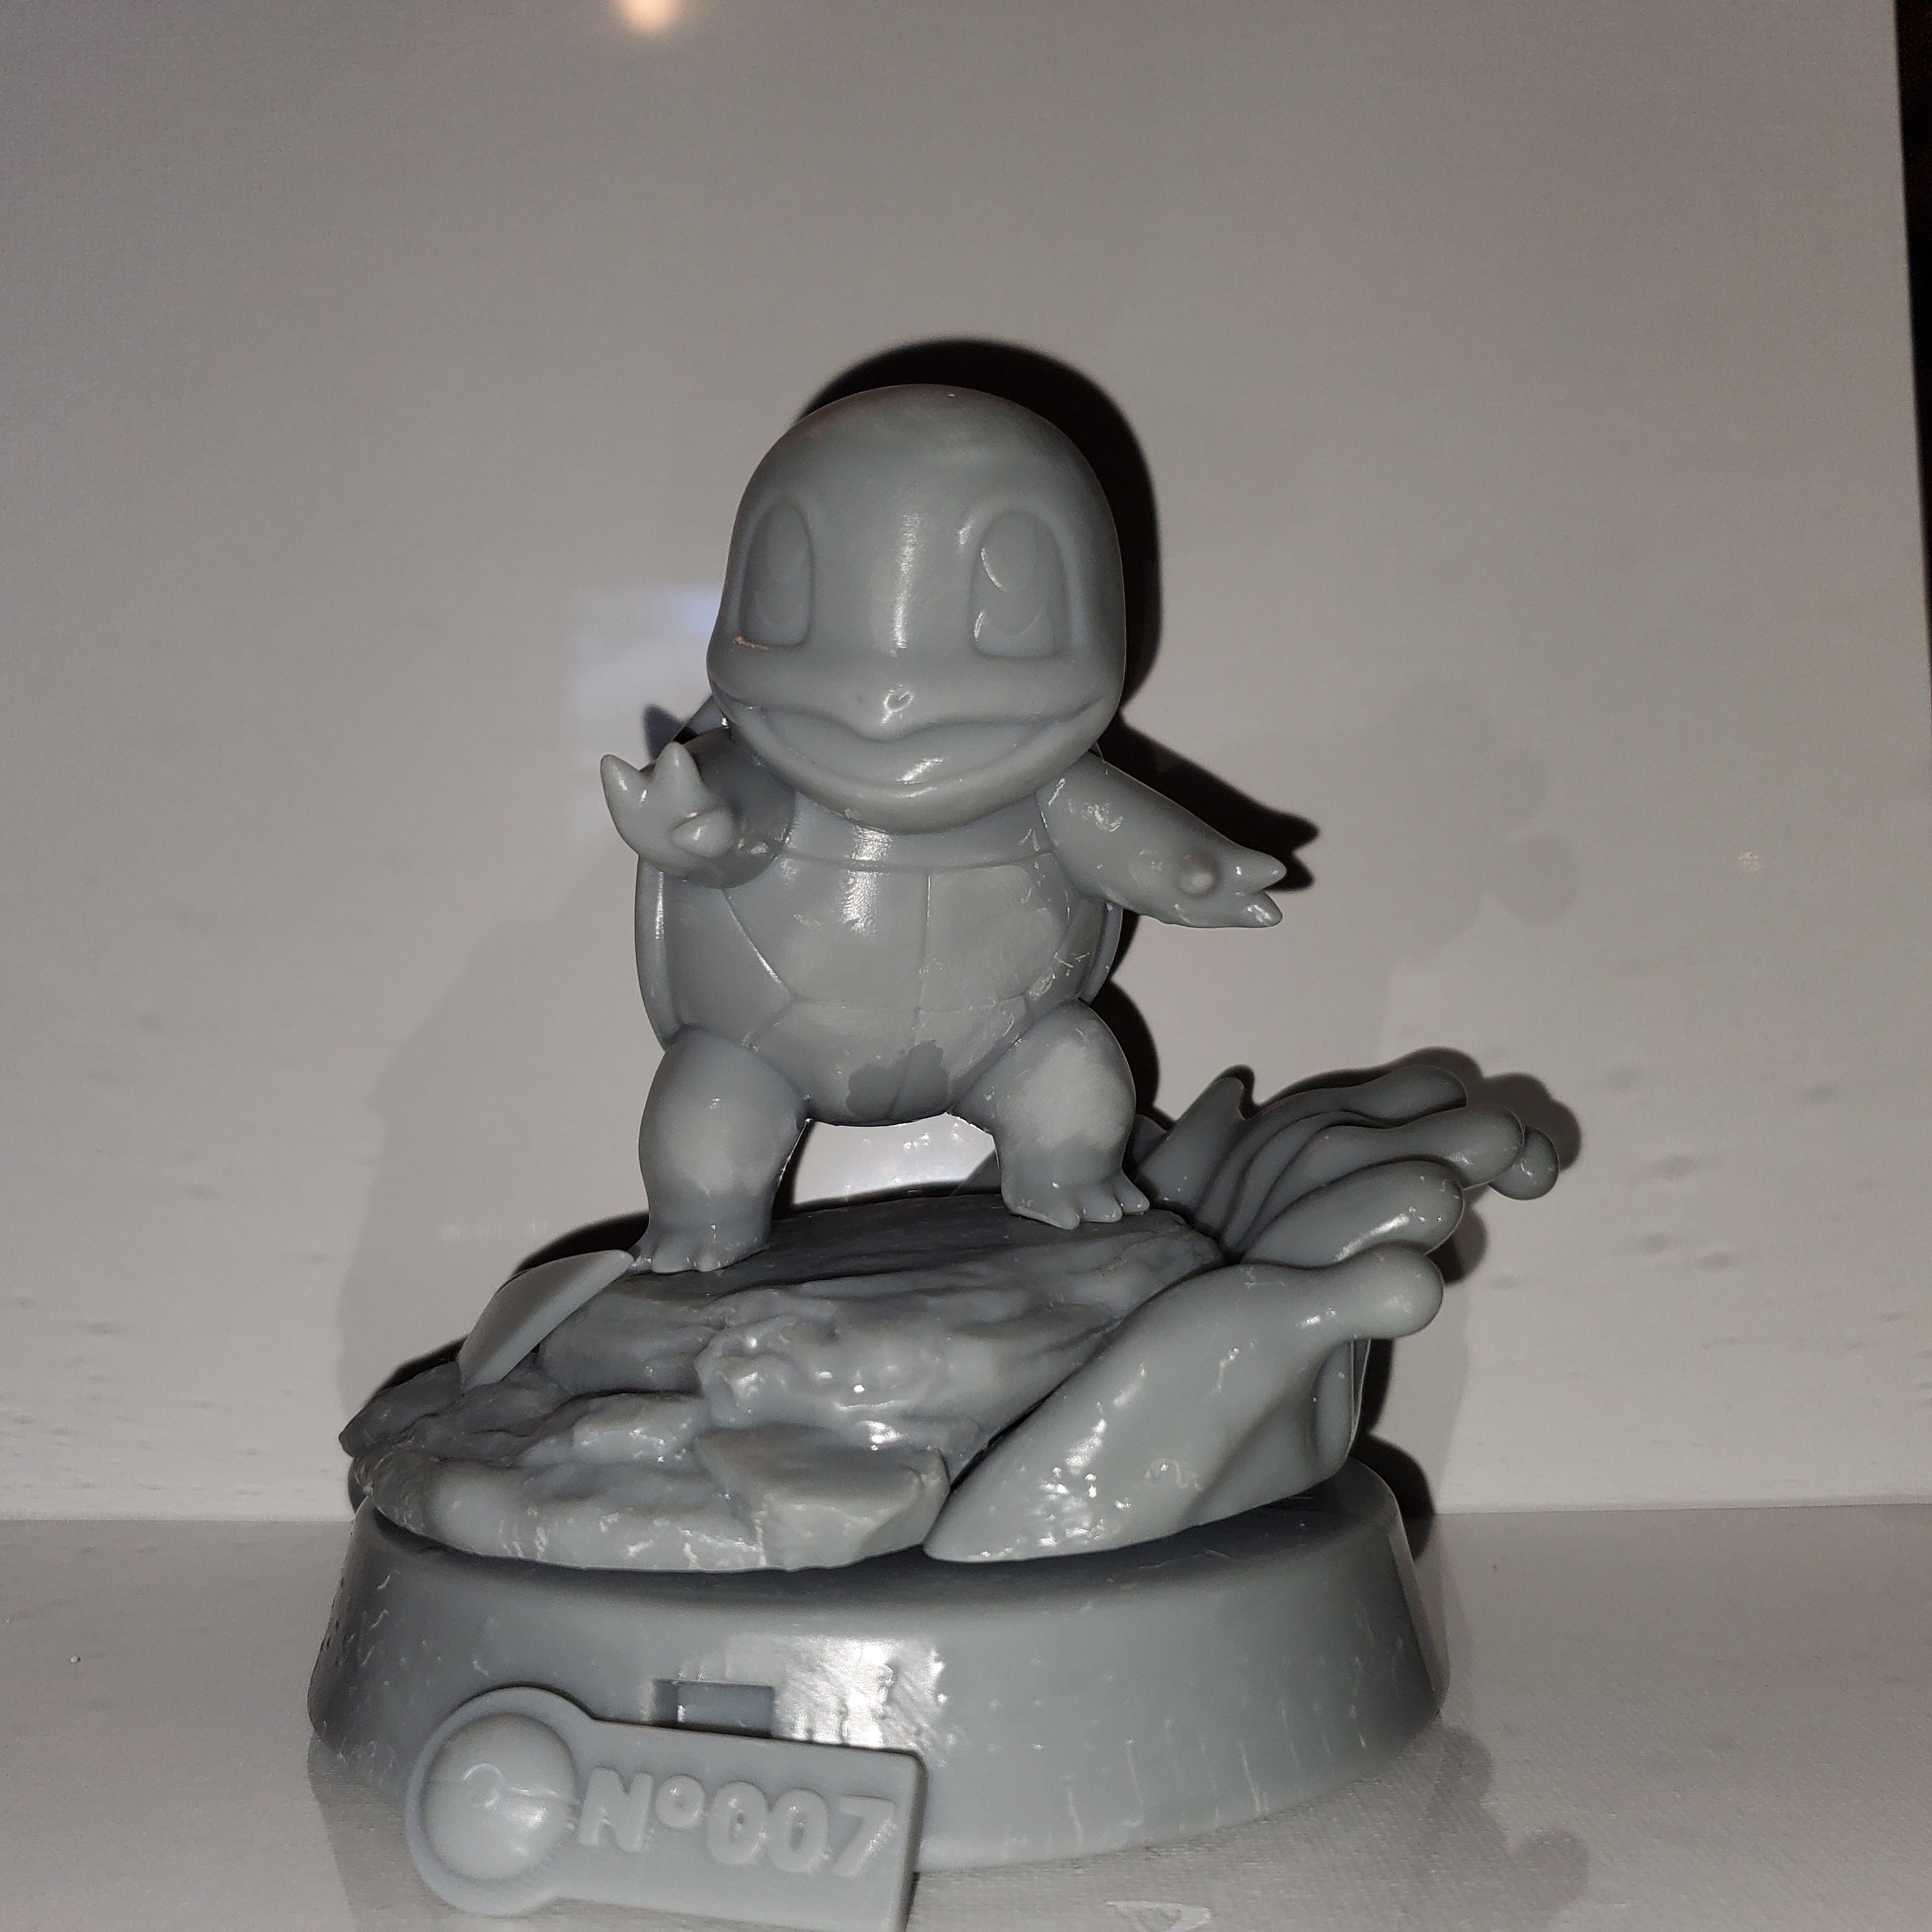 Figurine Pokemon Mewtwo (Pokedex Studio) unpainted unassembled 3D printed  kit